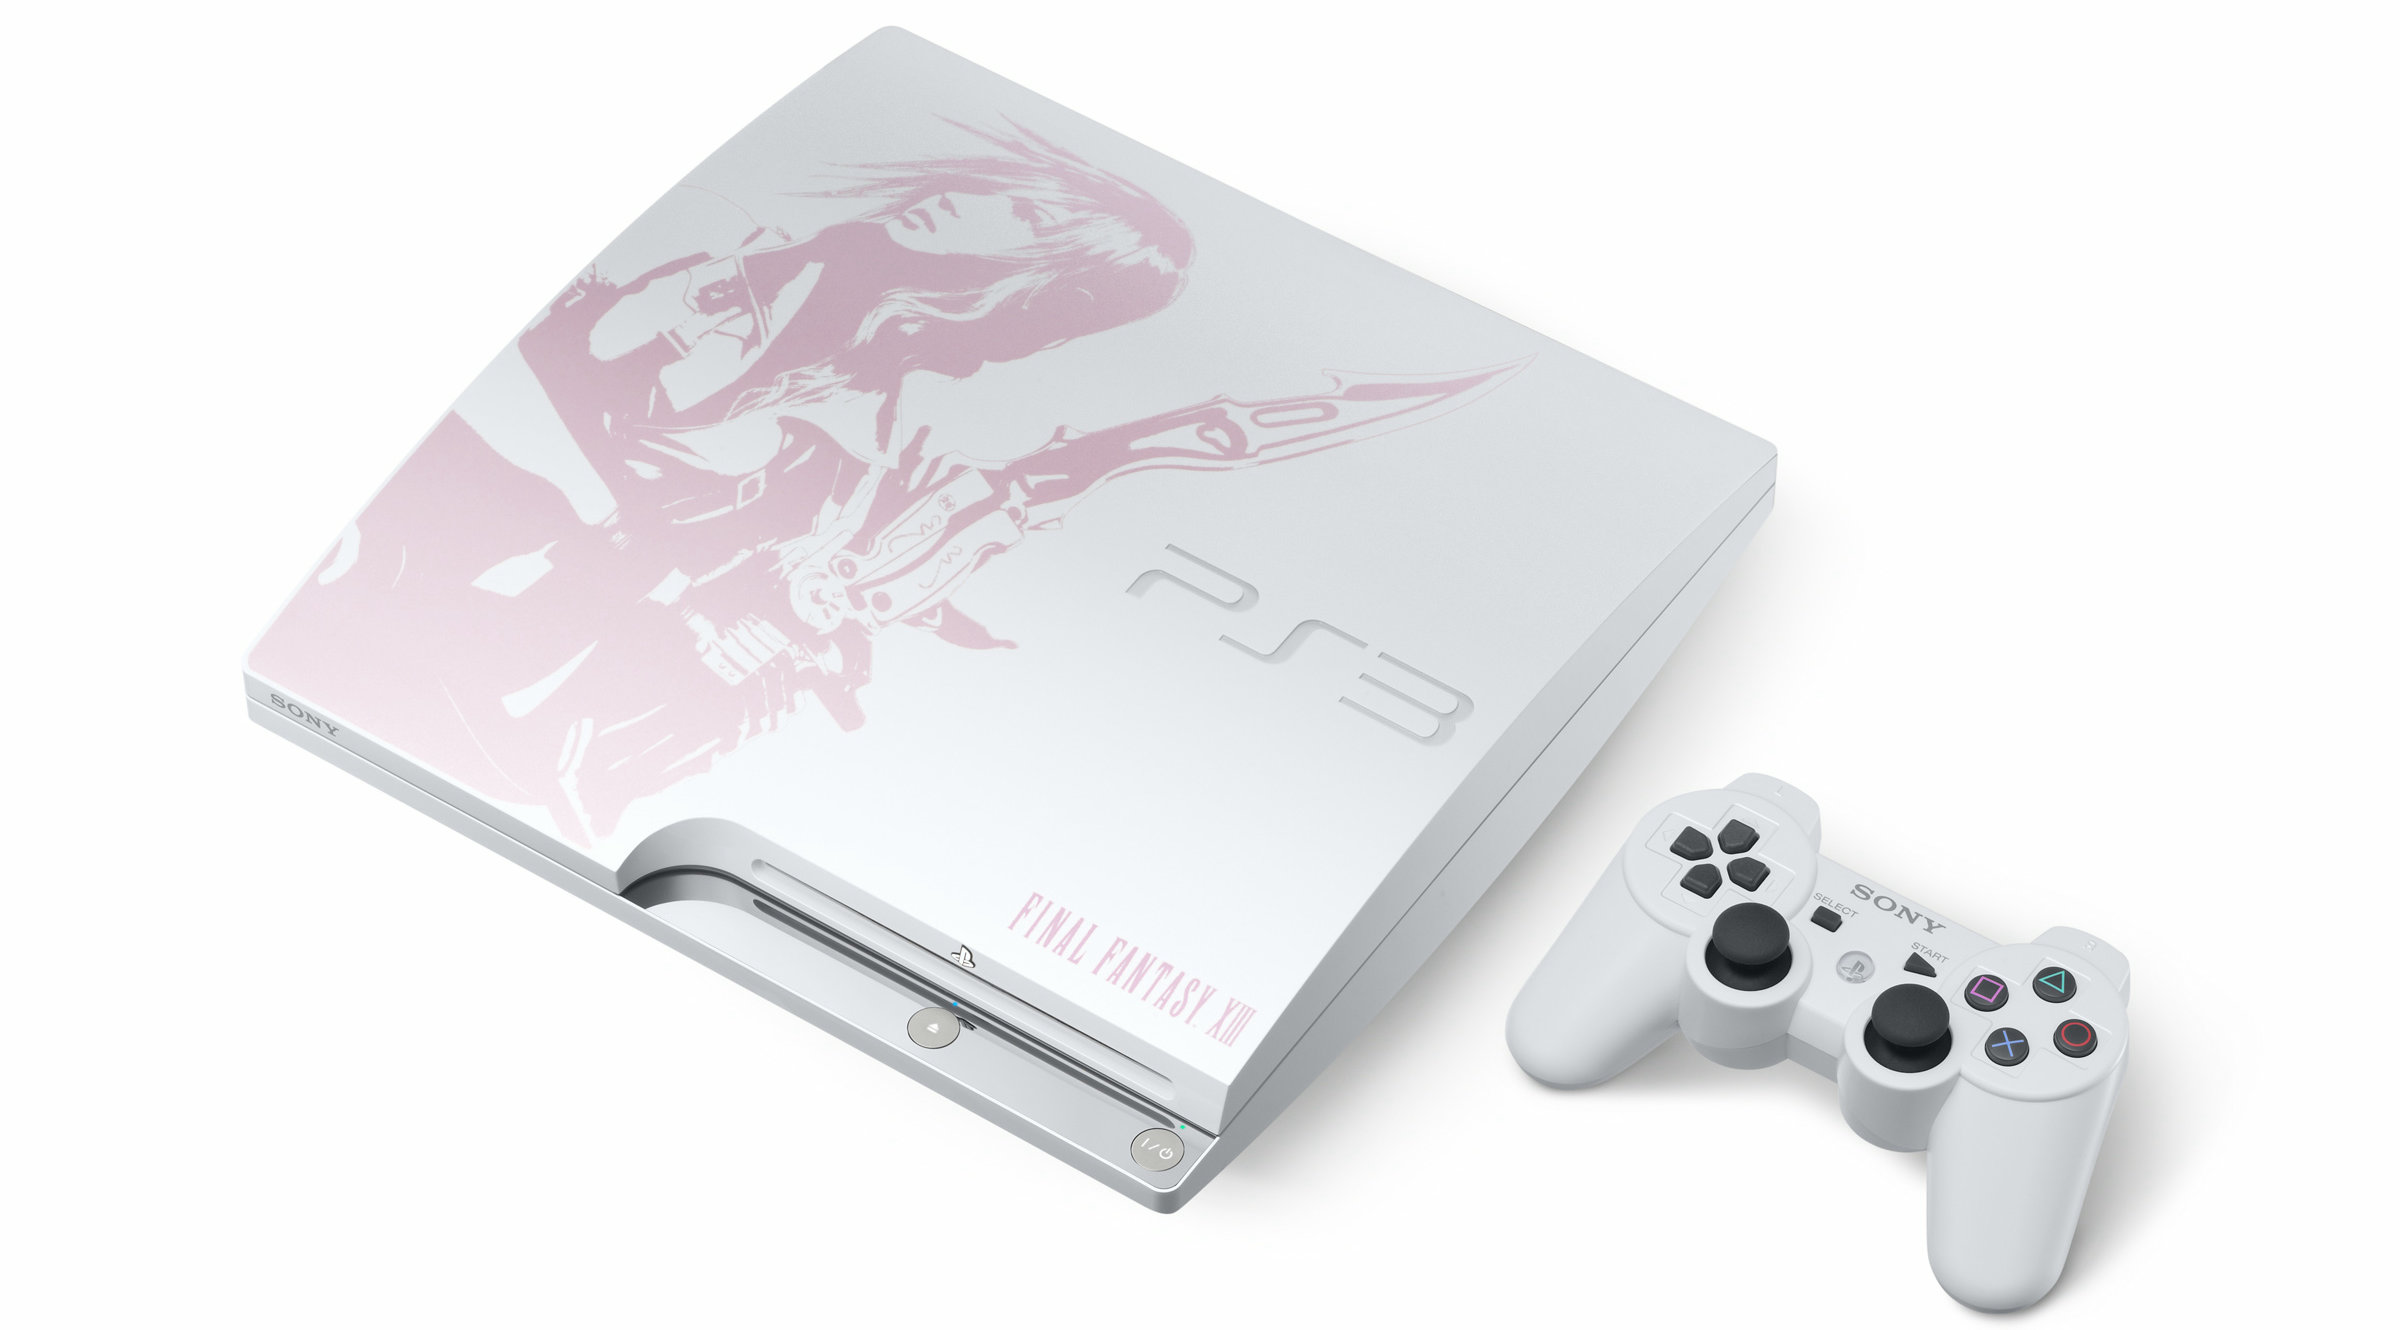 「PlayStation 3」 FINAL FANTASY XIII LIGHTNING EDITION 同捆版